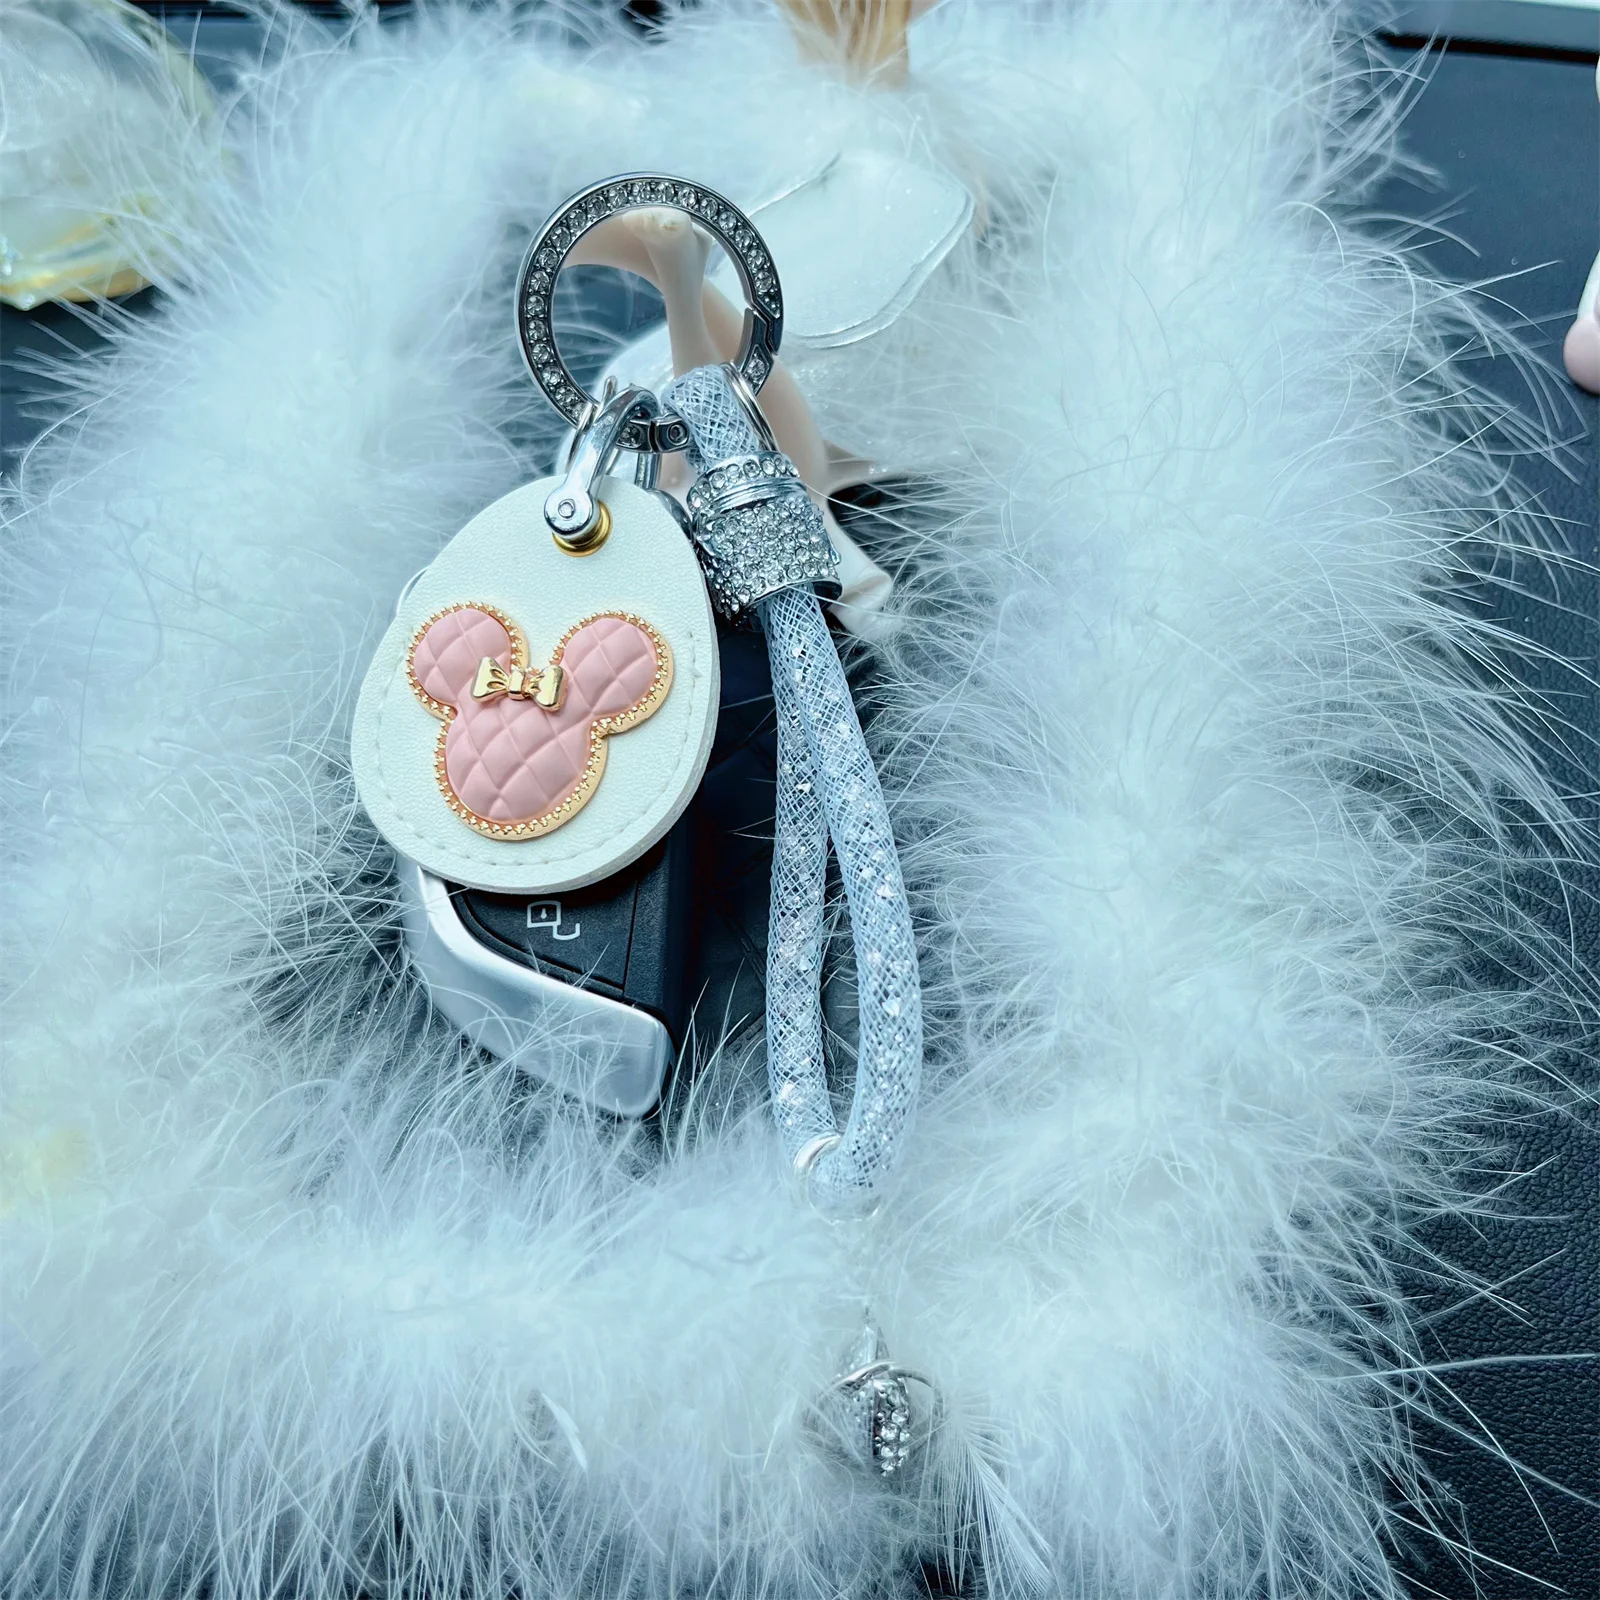 IRIVER BLANK Cute Bling Rhinestone Keychains for Women & Girls - Sparkle  and Shine Crystal Key Ring Charm for Handbags, Car Keys,Coin